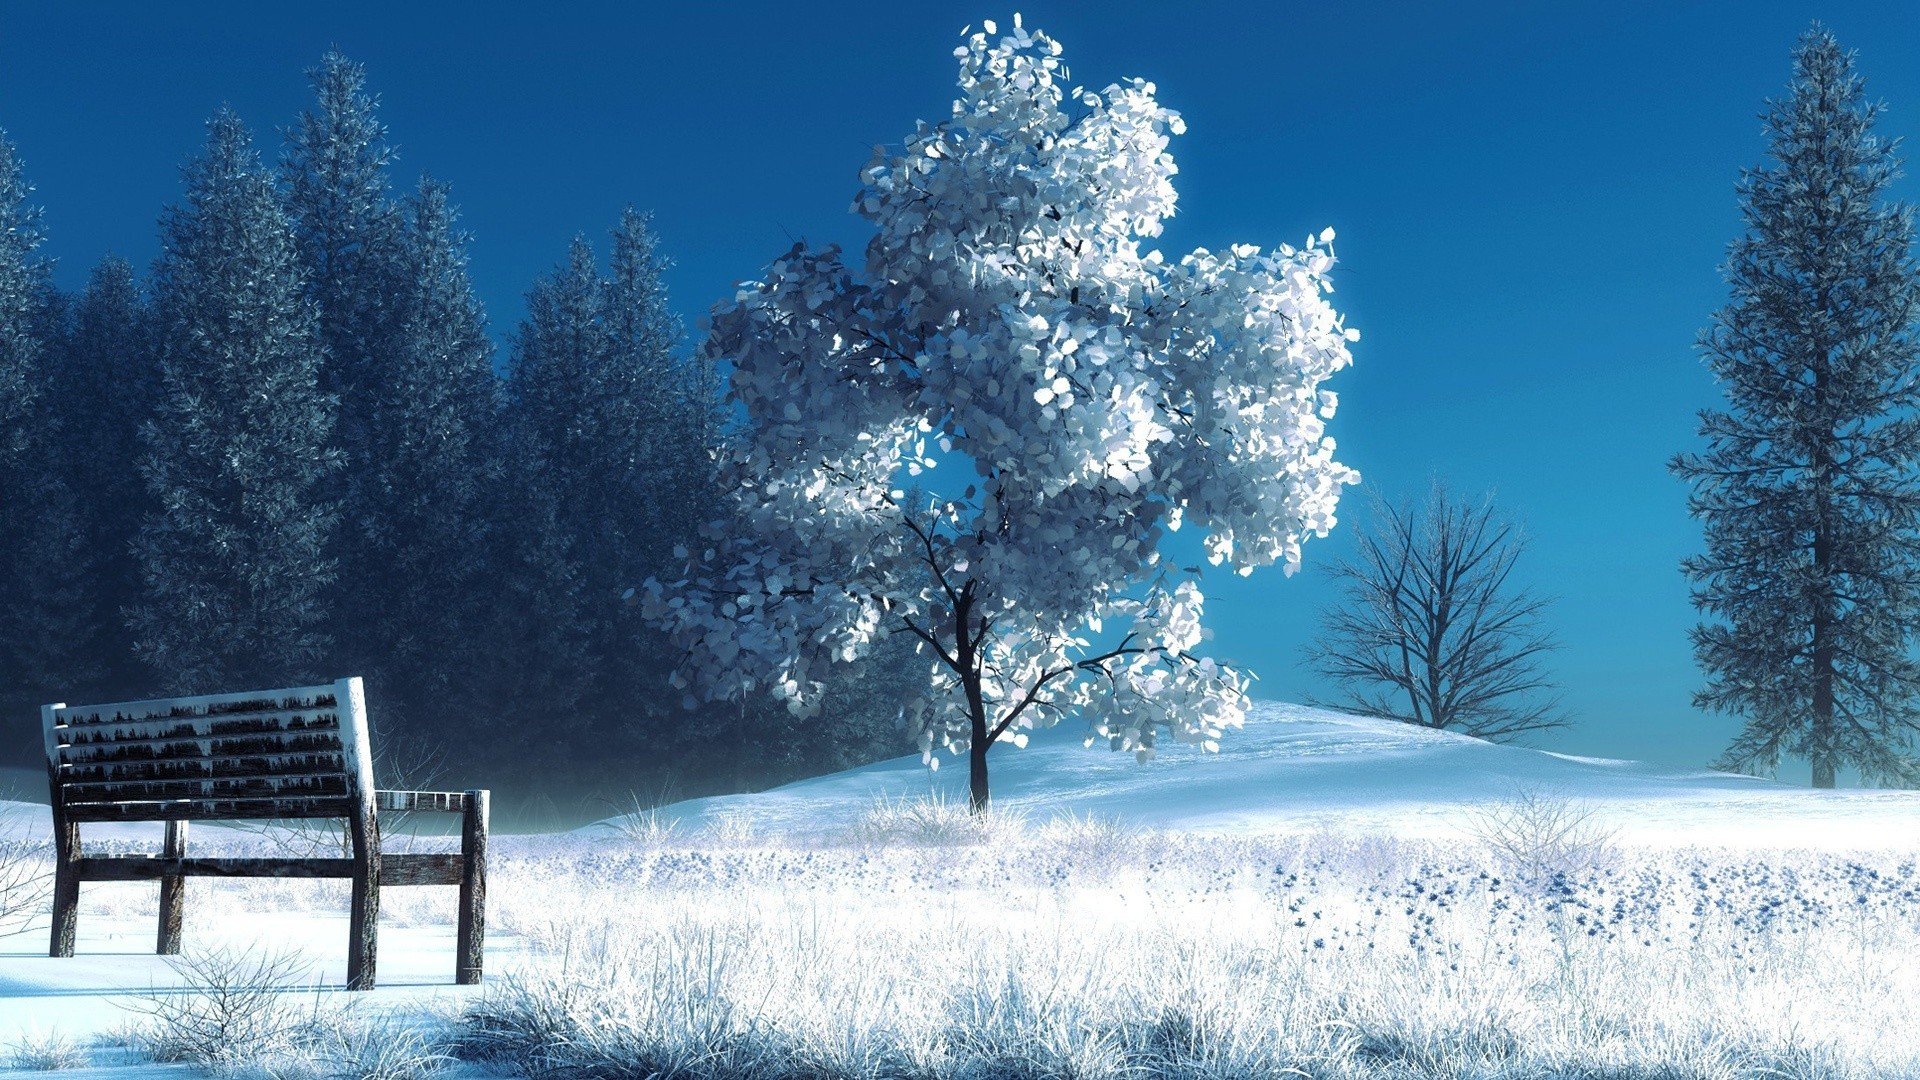 High Resolution Winter Landscape Wallpapers